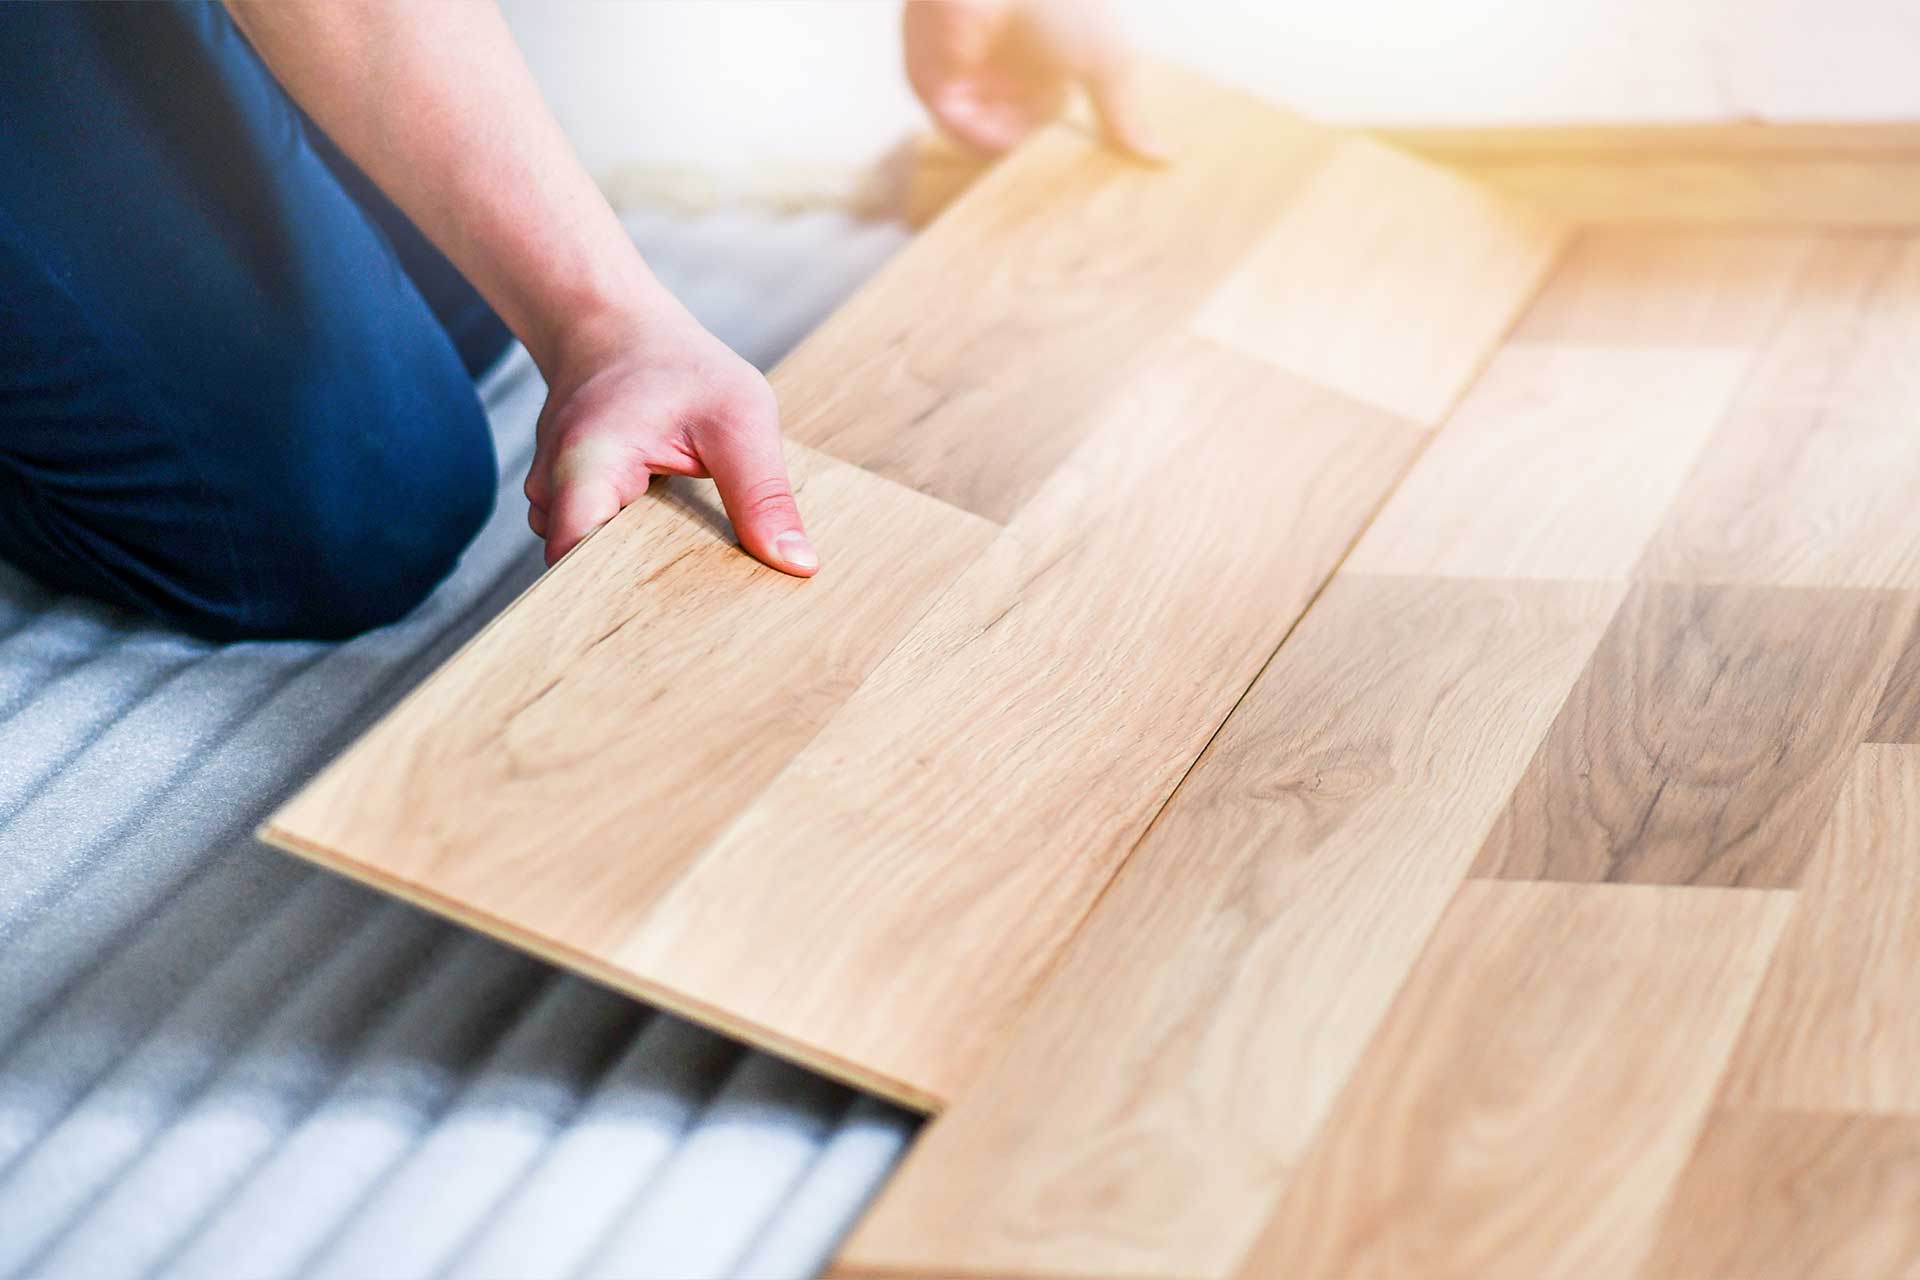 Laminate Flooring Fitting Cost In 2021, Wood Look Tile Flooring Cost Calculator